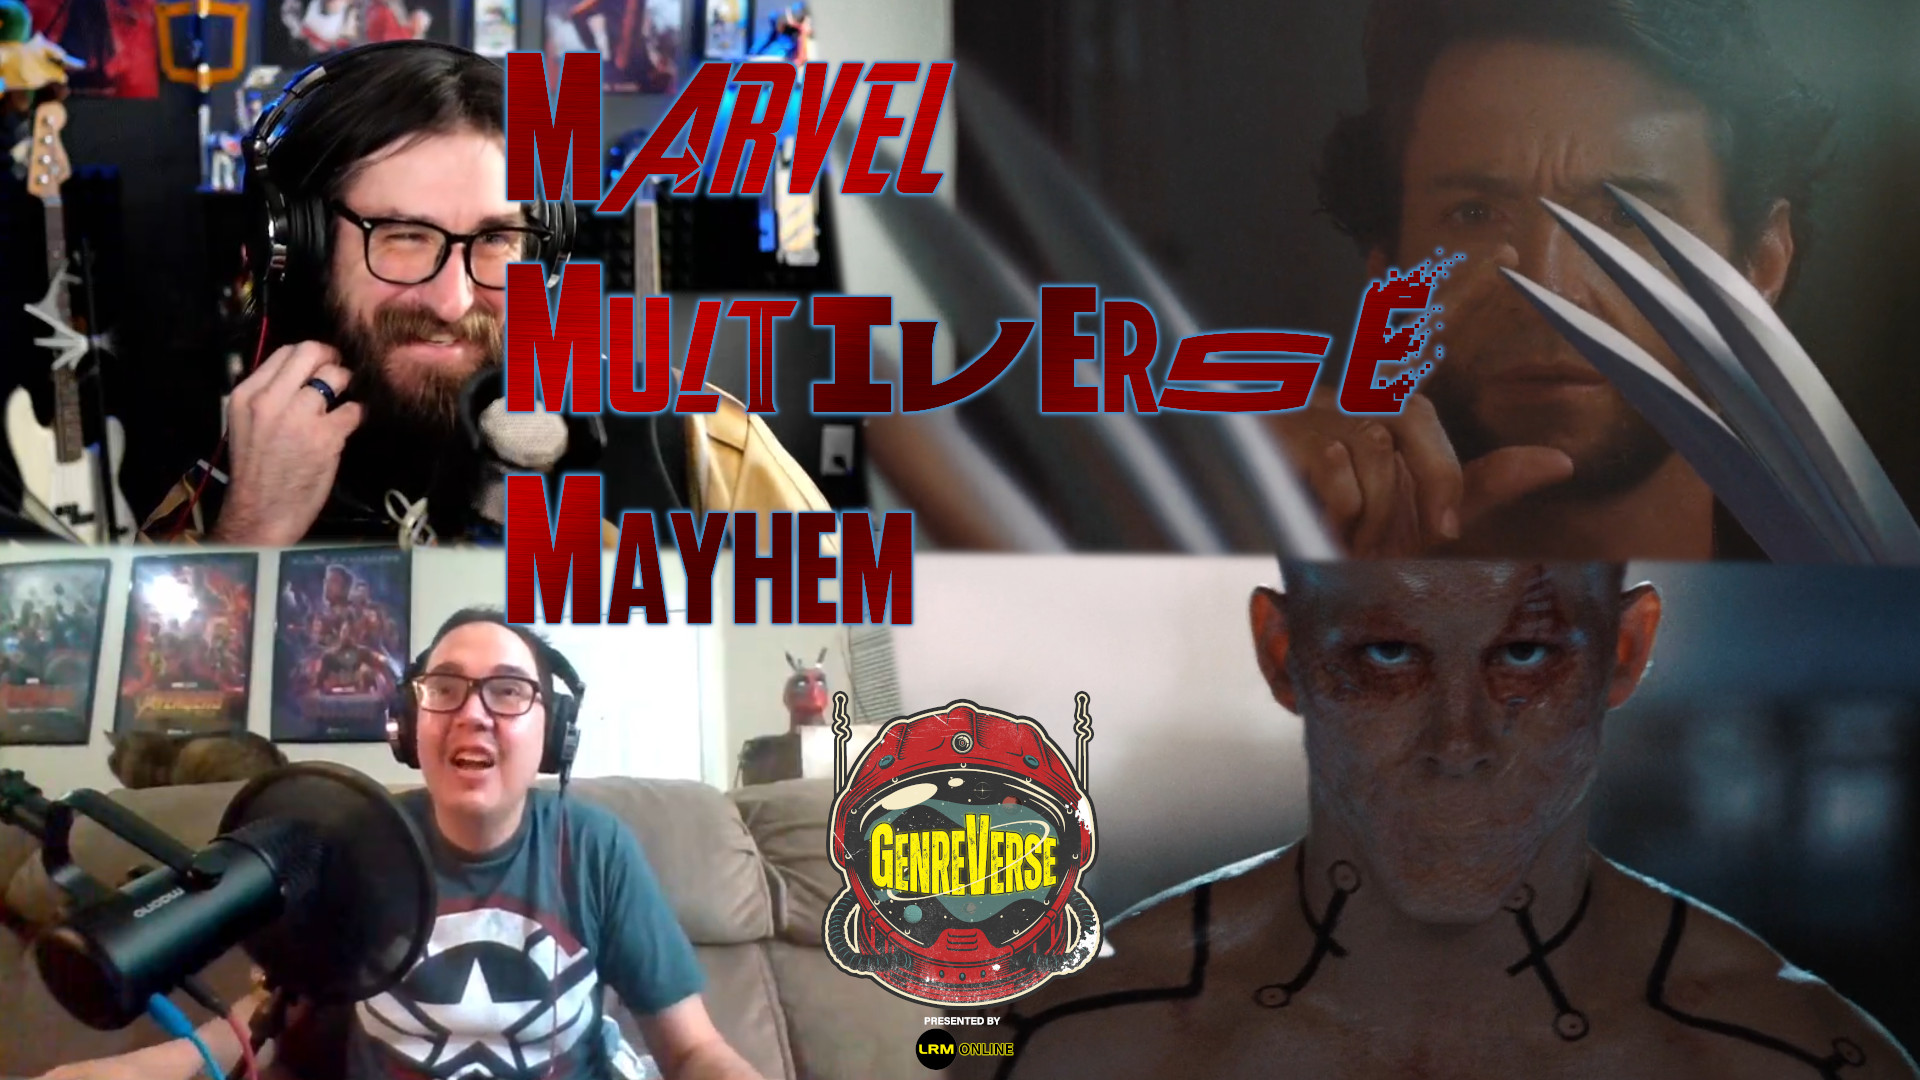 X-Men Origins Wolverine Review And Commentary Marvel Multiverse Mayhem Movie Night Super Cut Video Mixdown